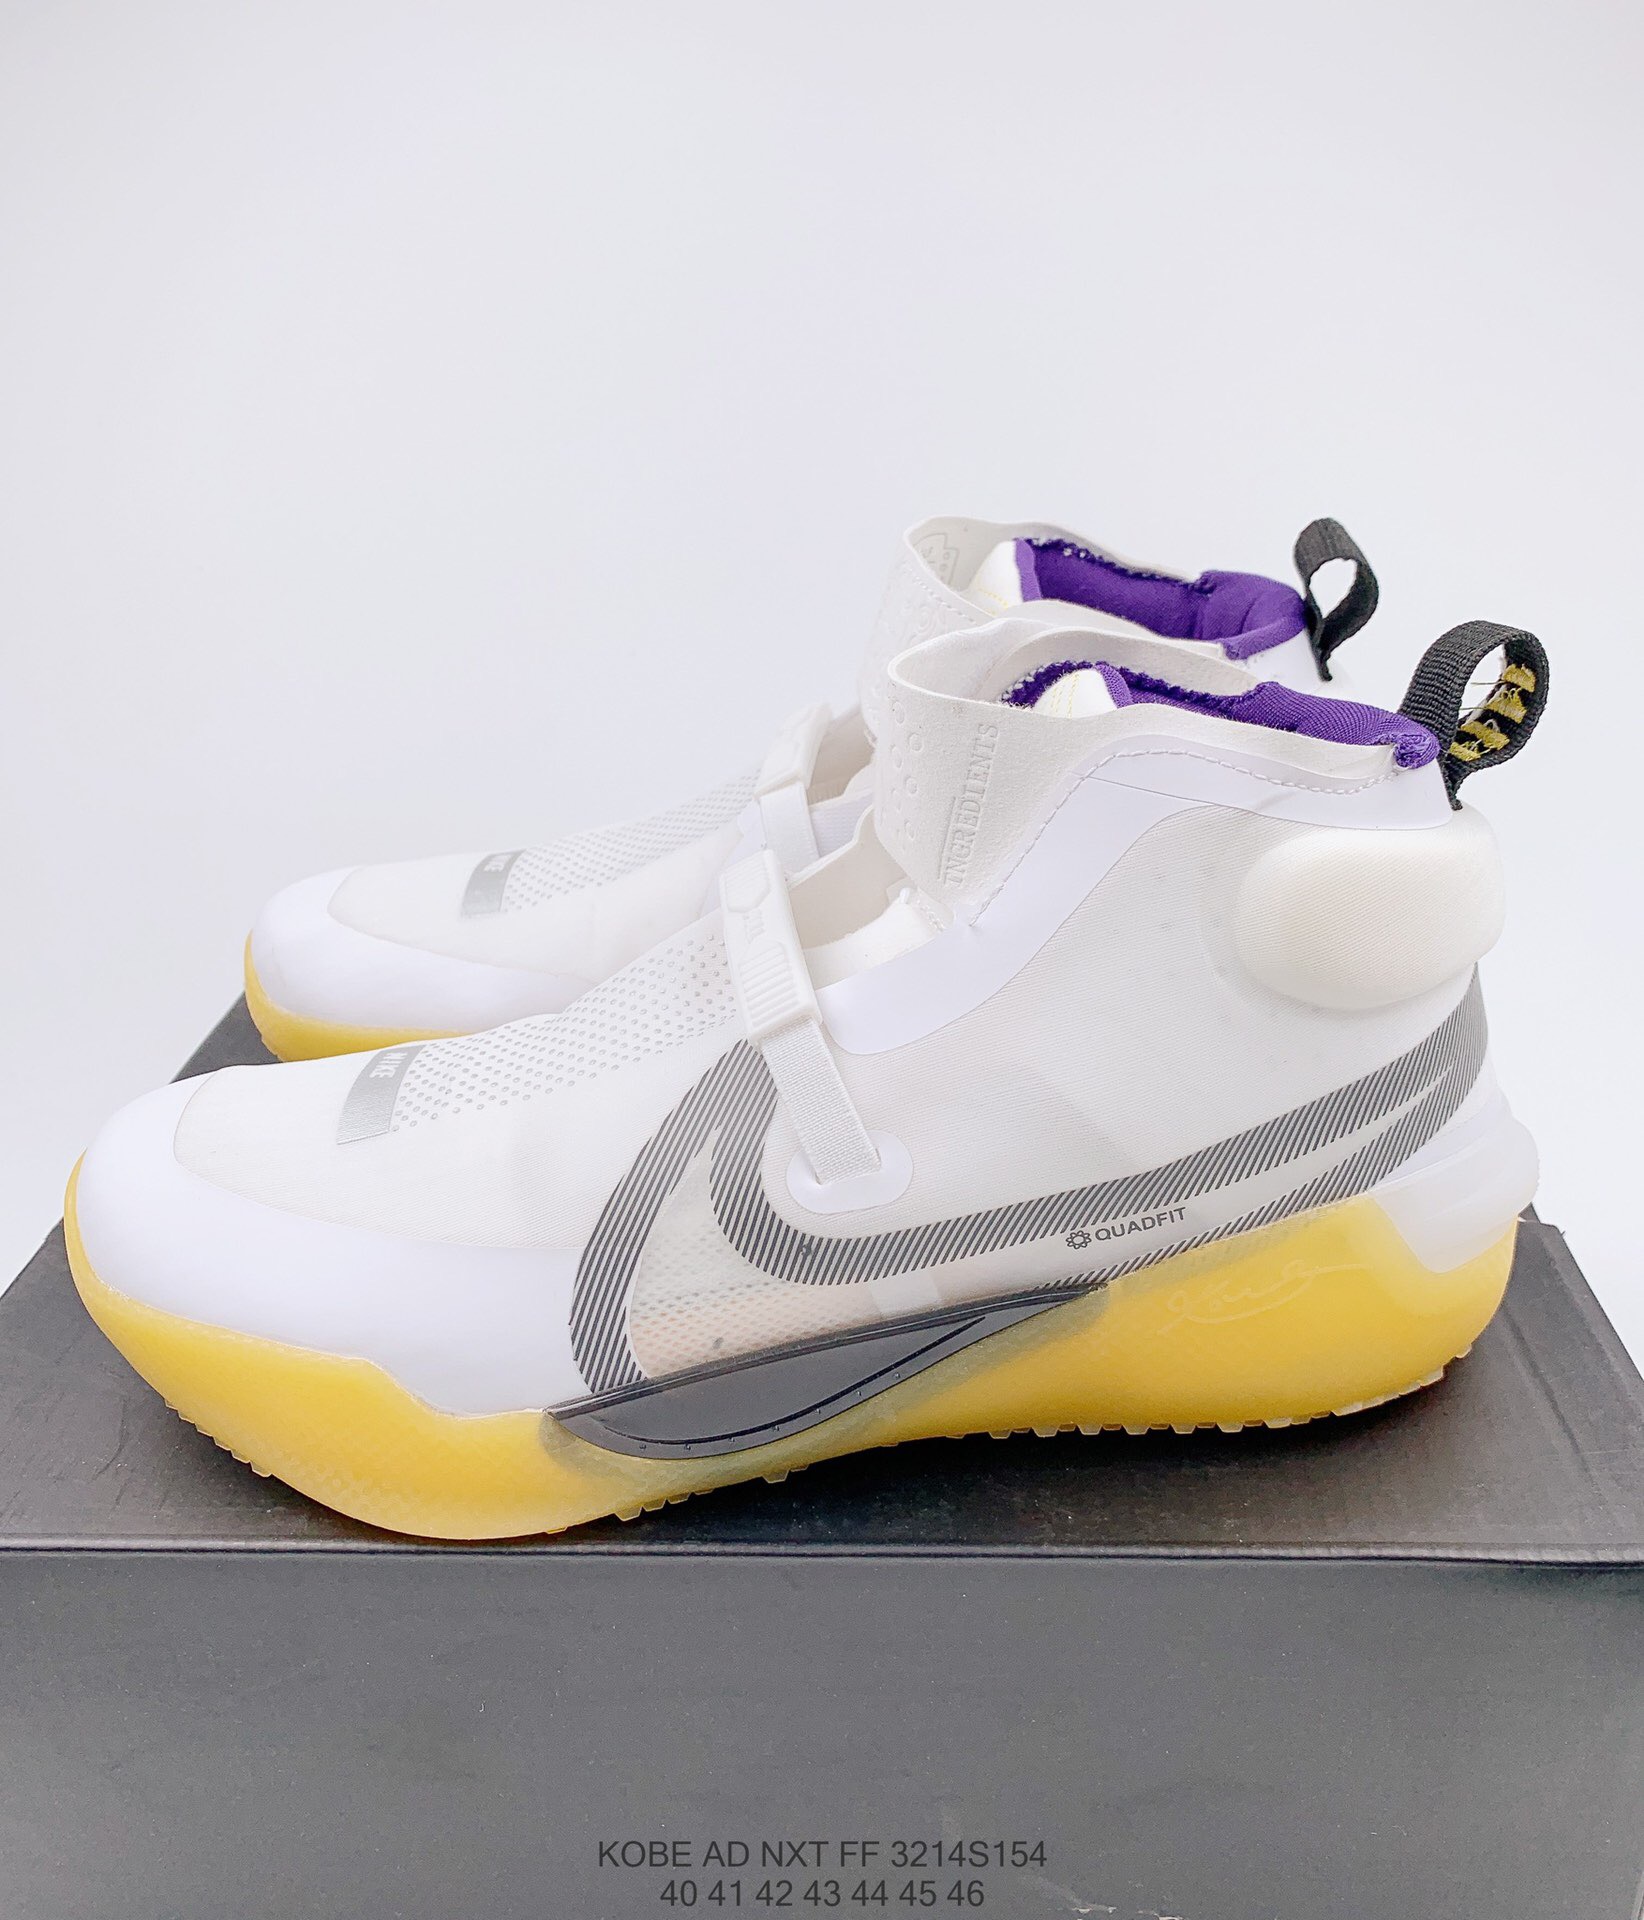 2020 Nike Kobe Bryant AD NXT FF White Purple Yellow